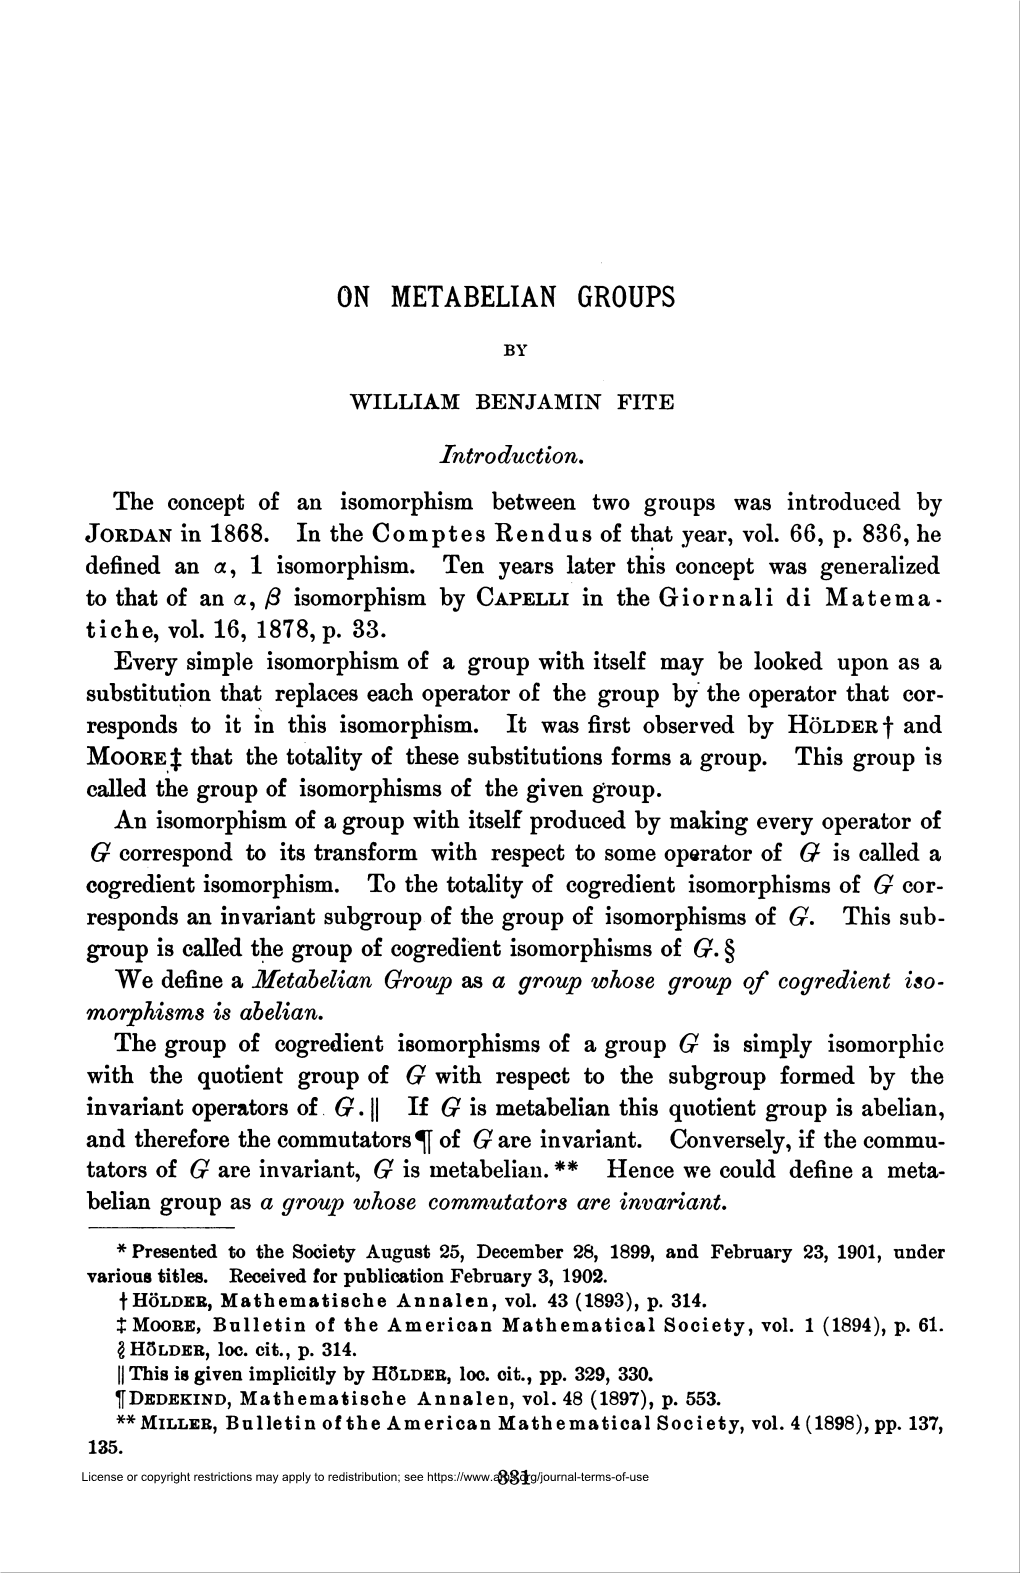 On Metabelian Groups